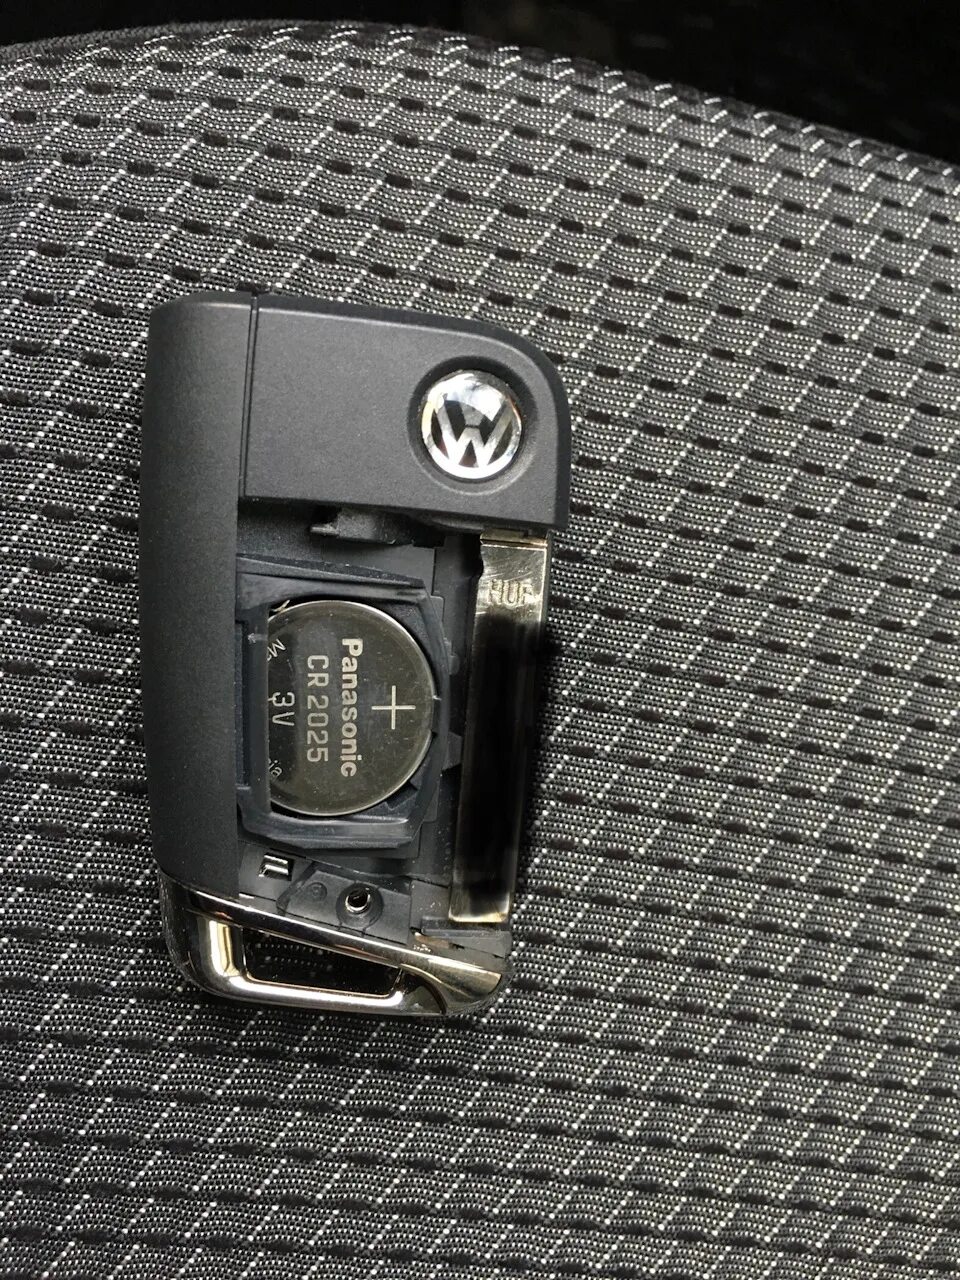 Ключ VW Tiguan 2. Батарейка в ключ Тигуан 2. Батарейка для ключа Фольксваген Тигуан 2. Tiguan 2019 батарейка в ключ. Батарейка ключ volkswagen